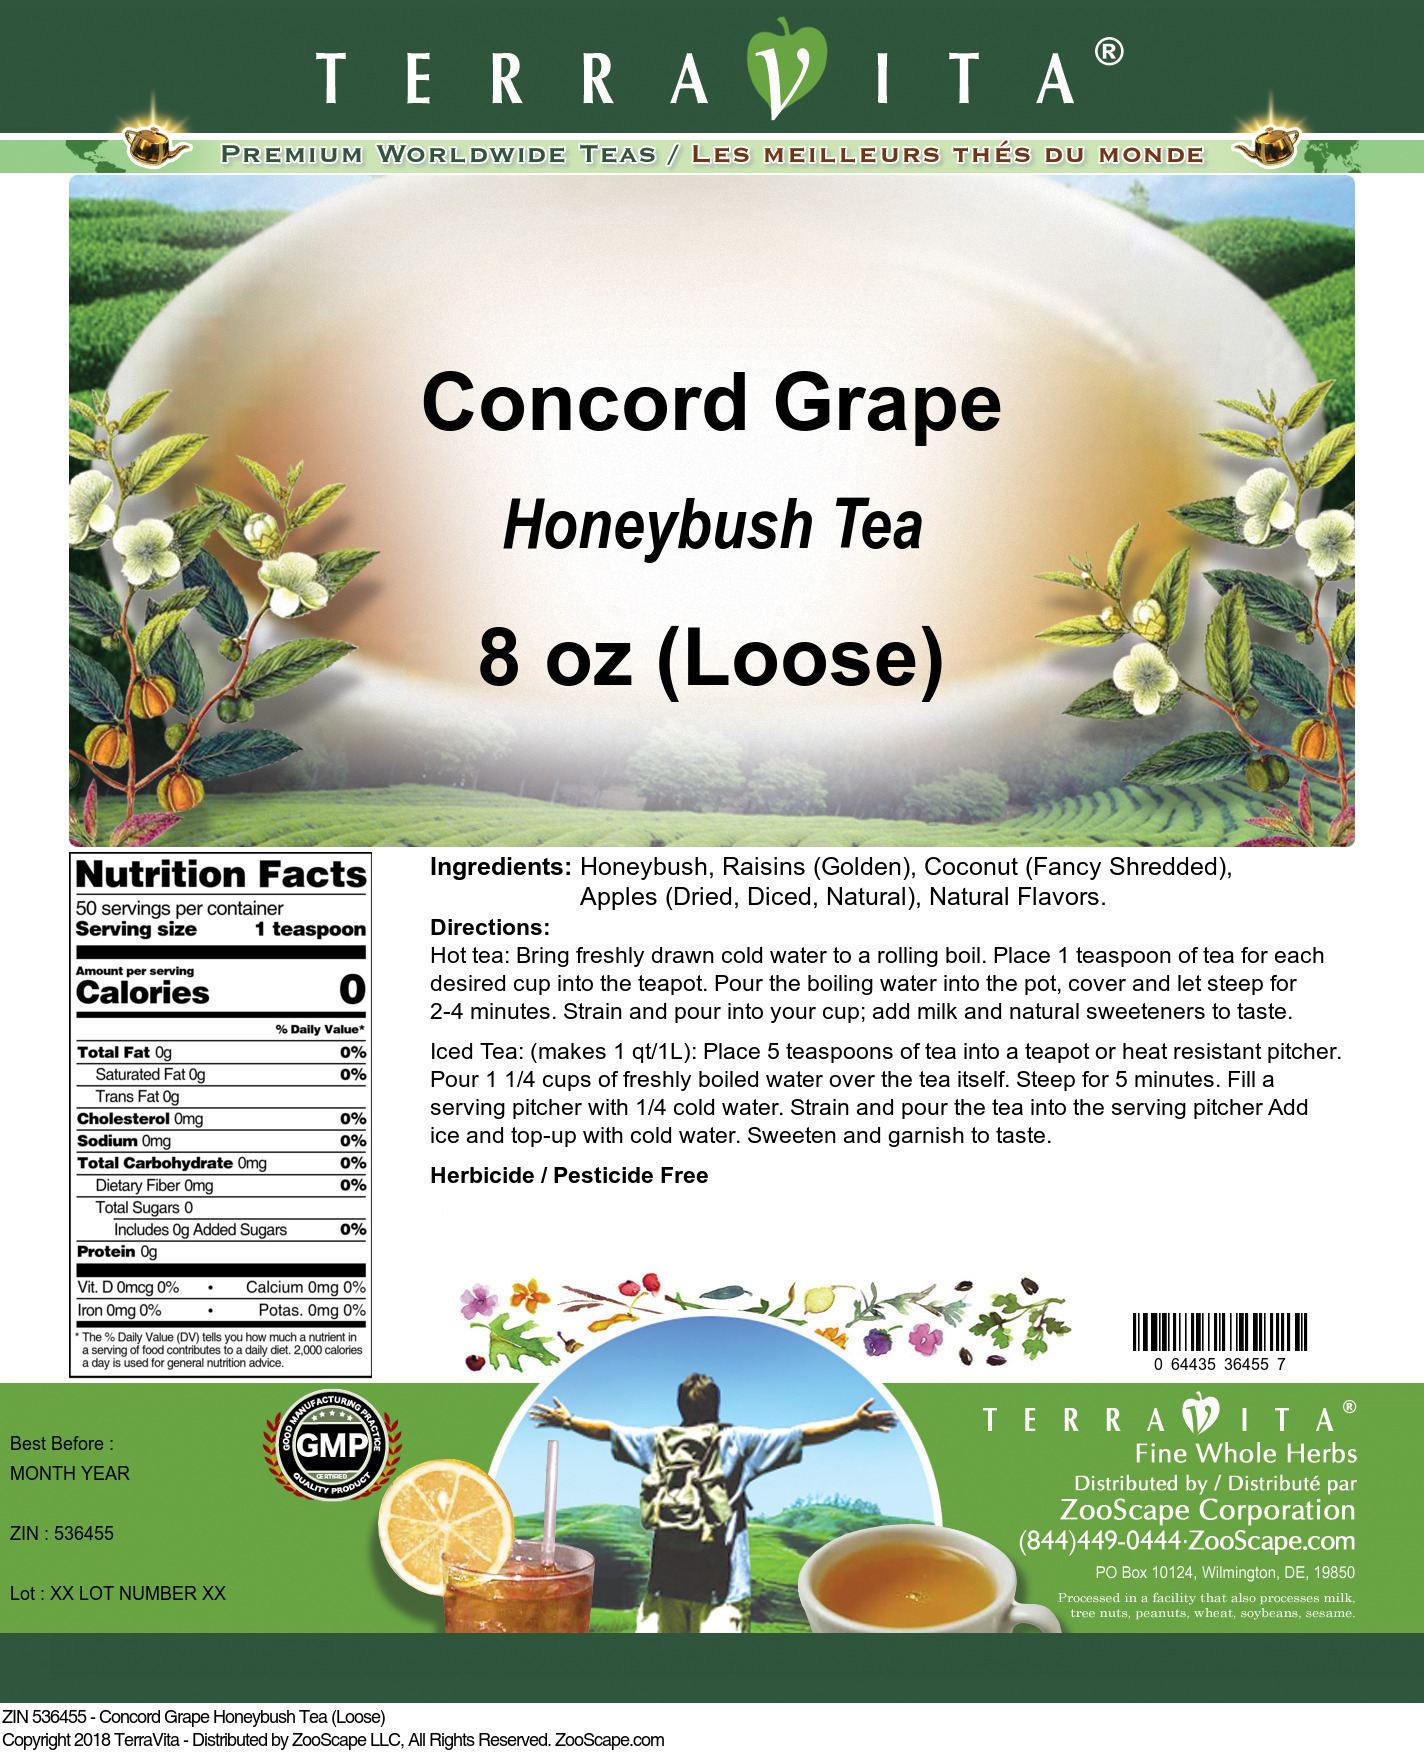 Concord Grape Honeybush Tea (Loose) - Label